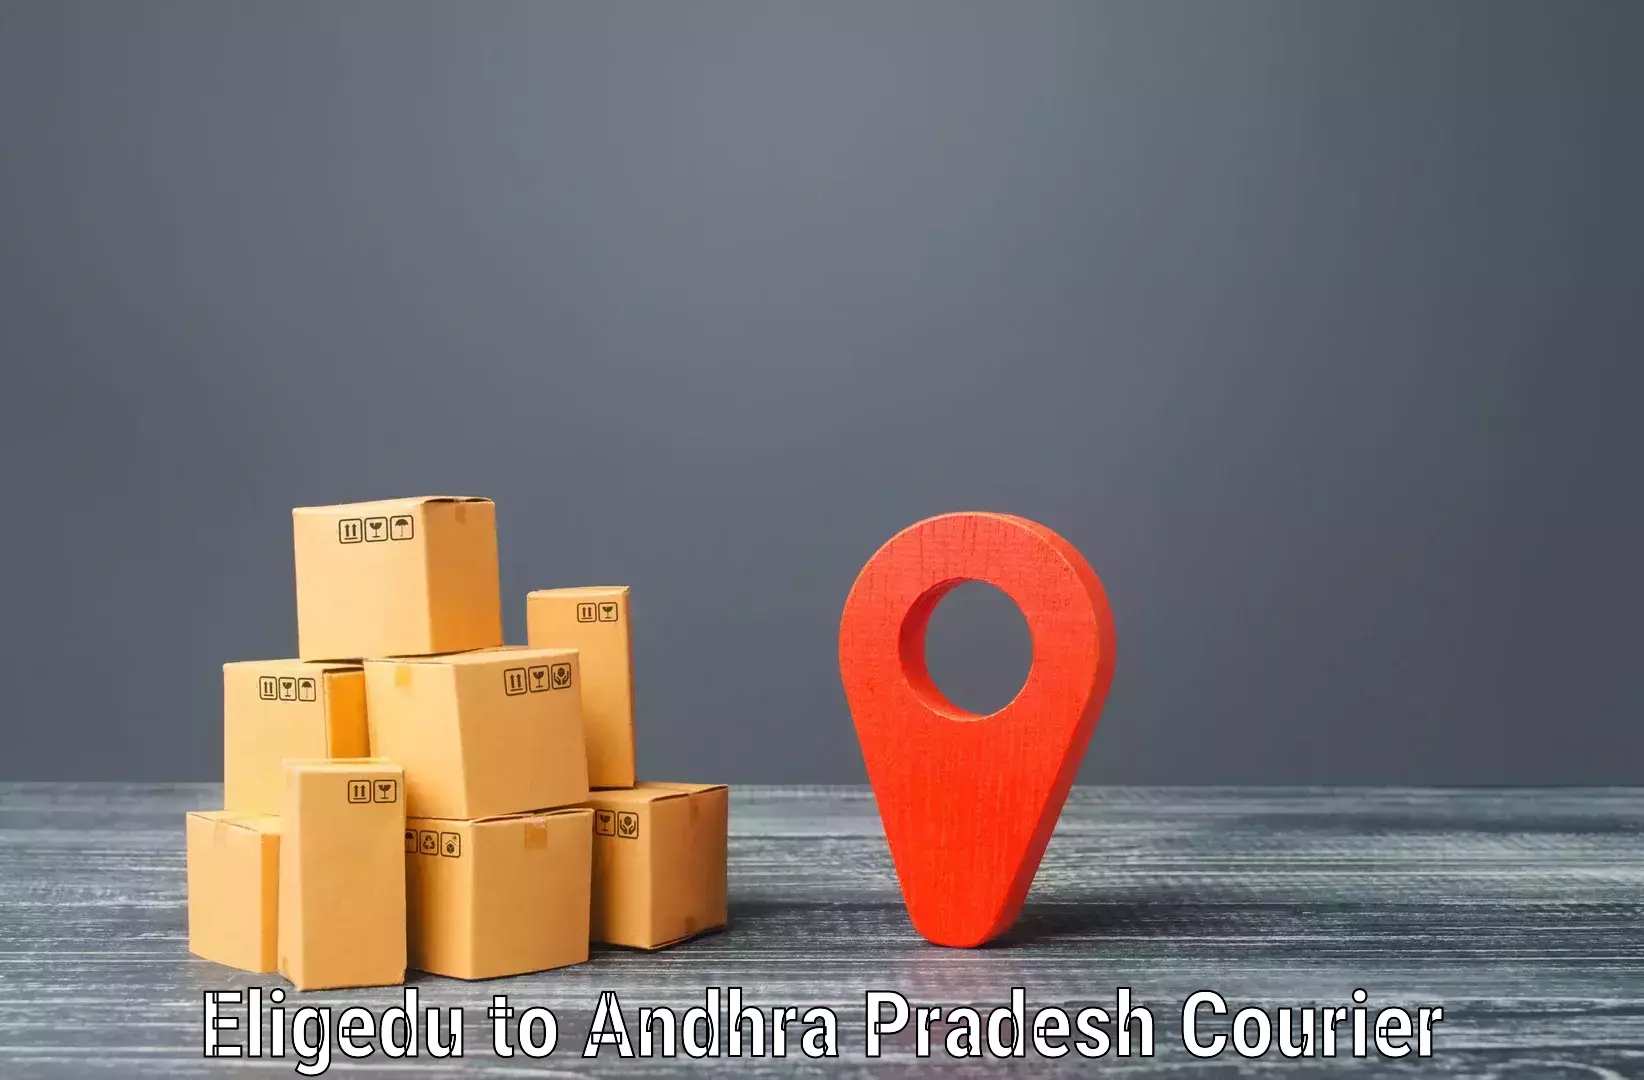 Remote area delivery in Eligedu to Bhogapuram